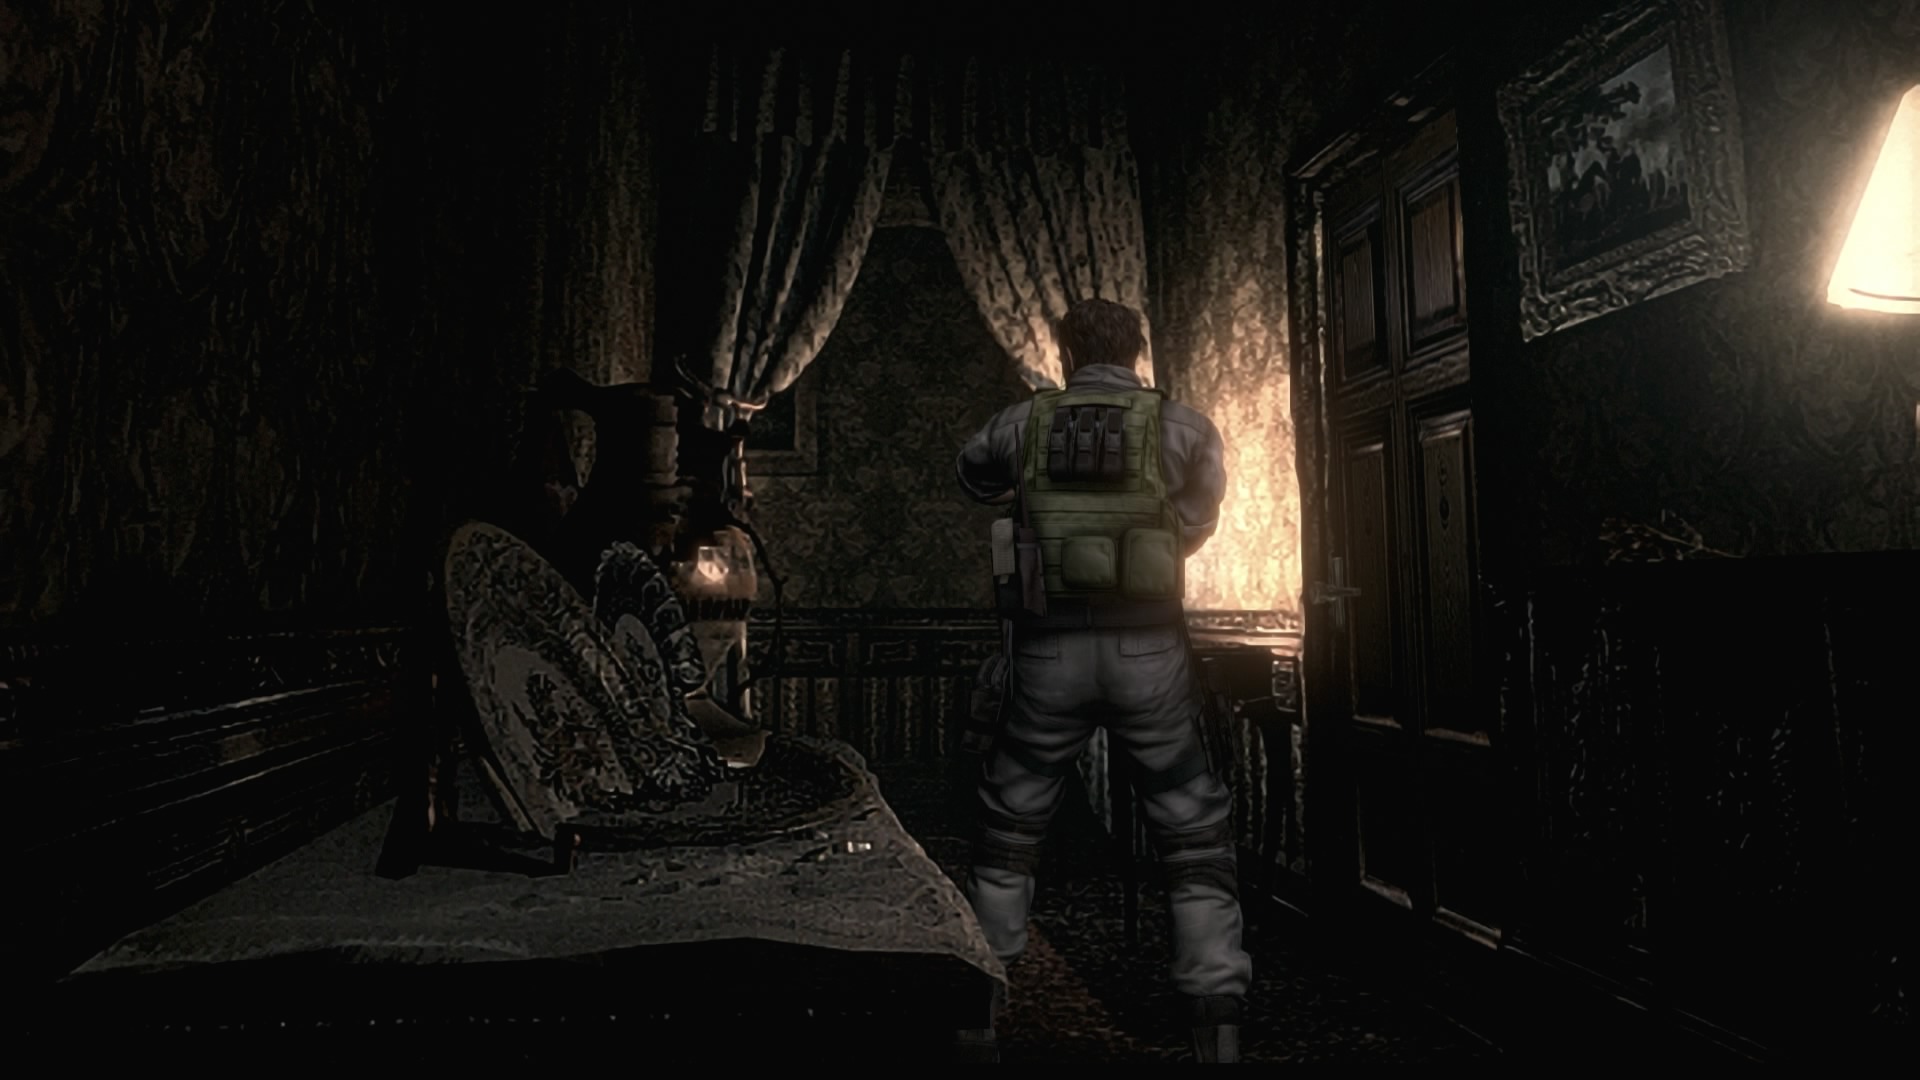 60fps] Resident Evil HD Remaster: PS4 30fps vs PC 60fps Comparison